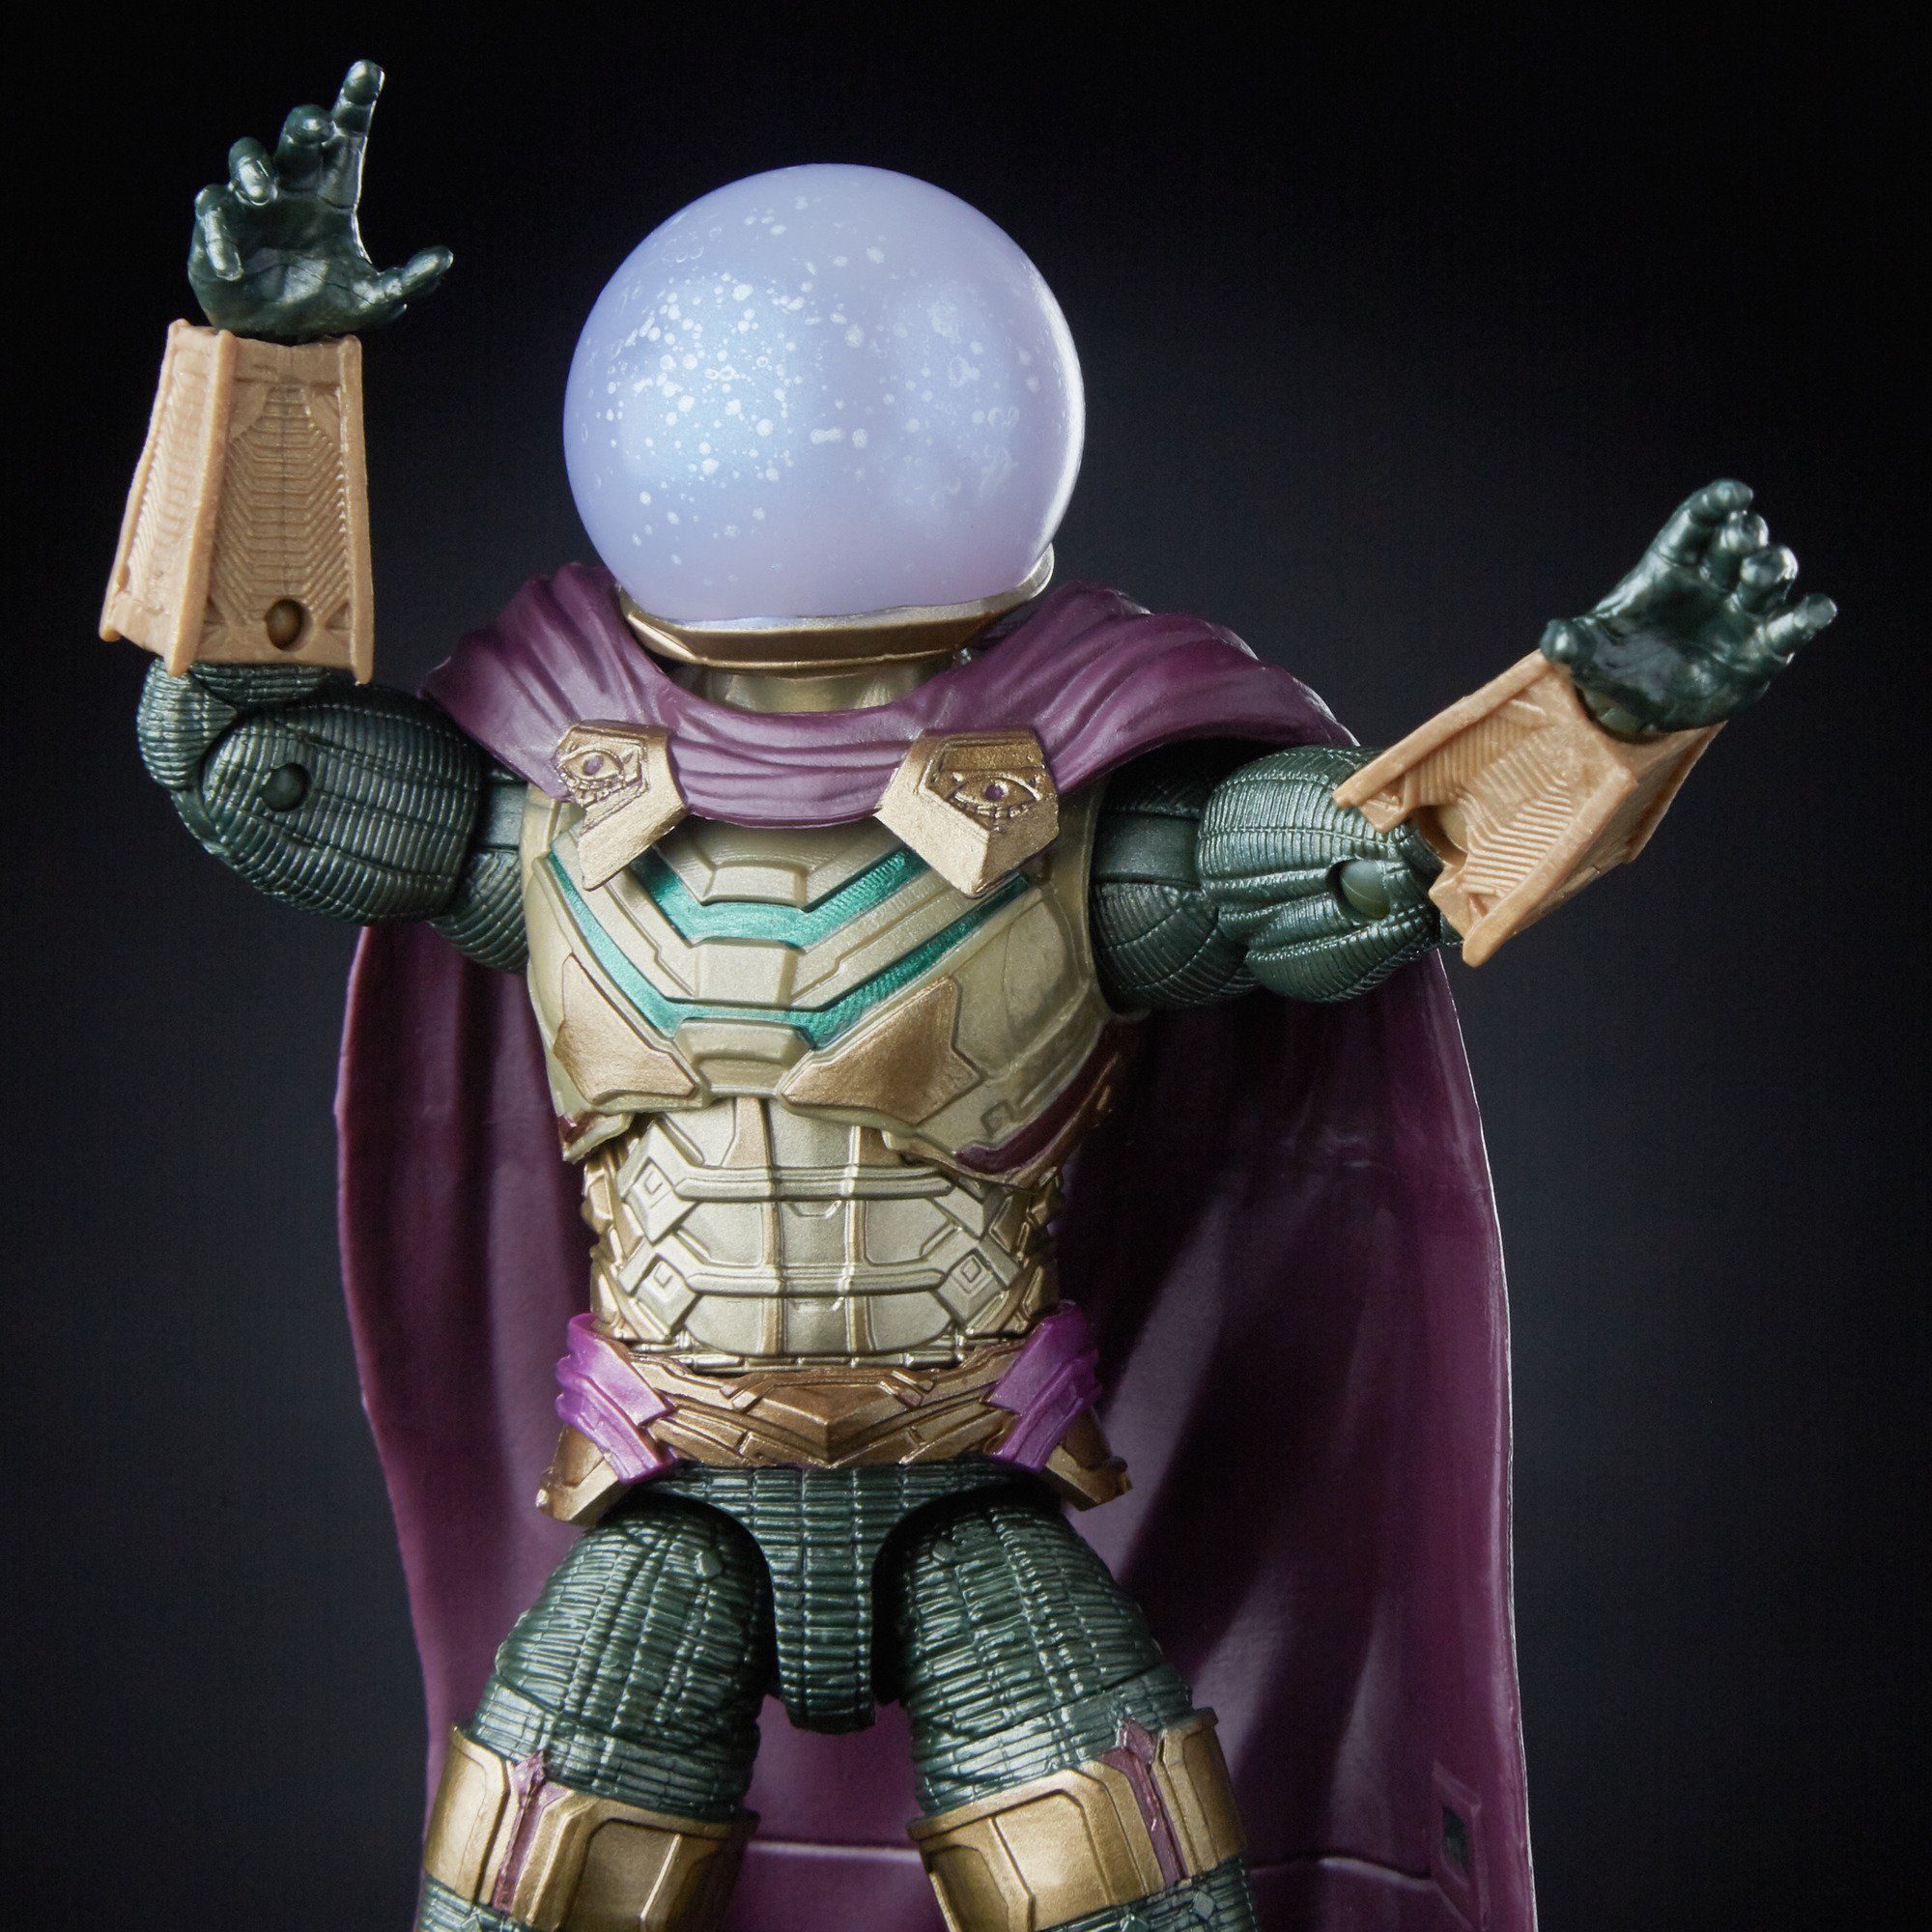 Marvel Legends Mysterio figure